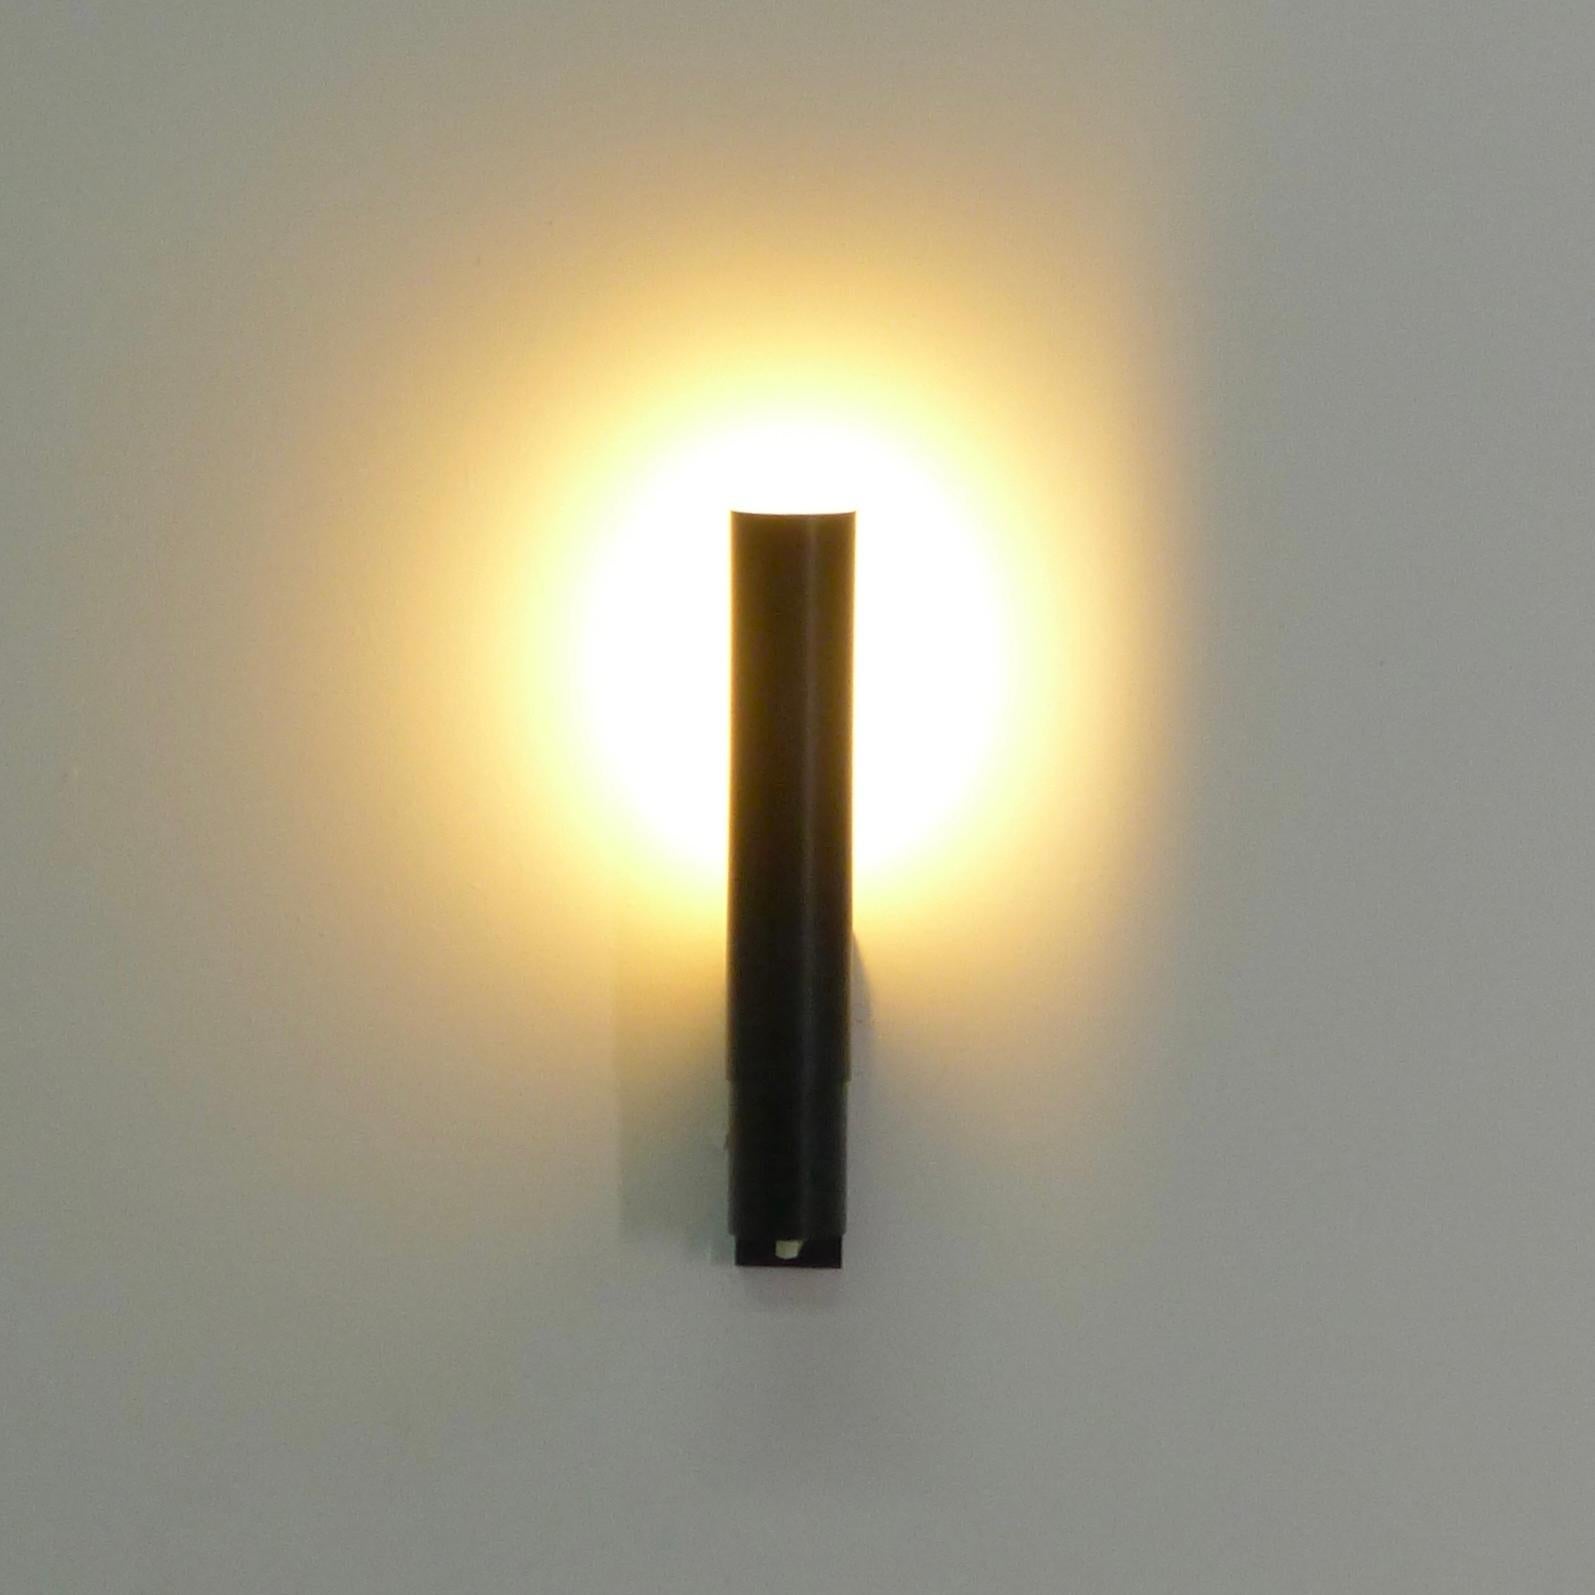 Gino Sarfatti, Wall Light, model 211, designed 1955, made by Arteluce 1950s For Sale 1